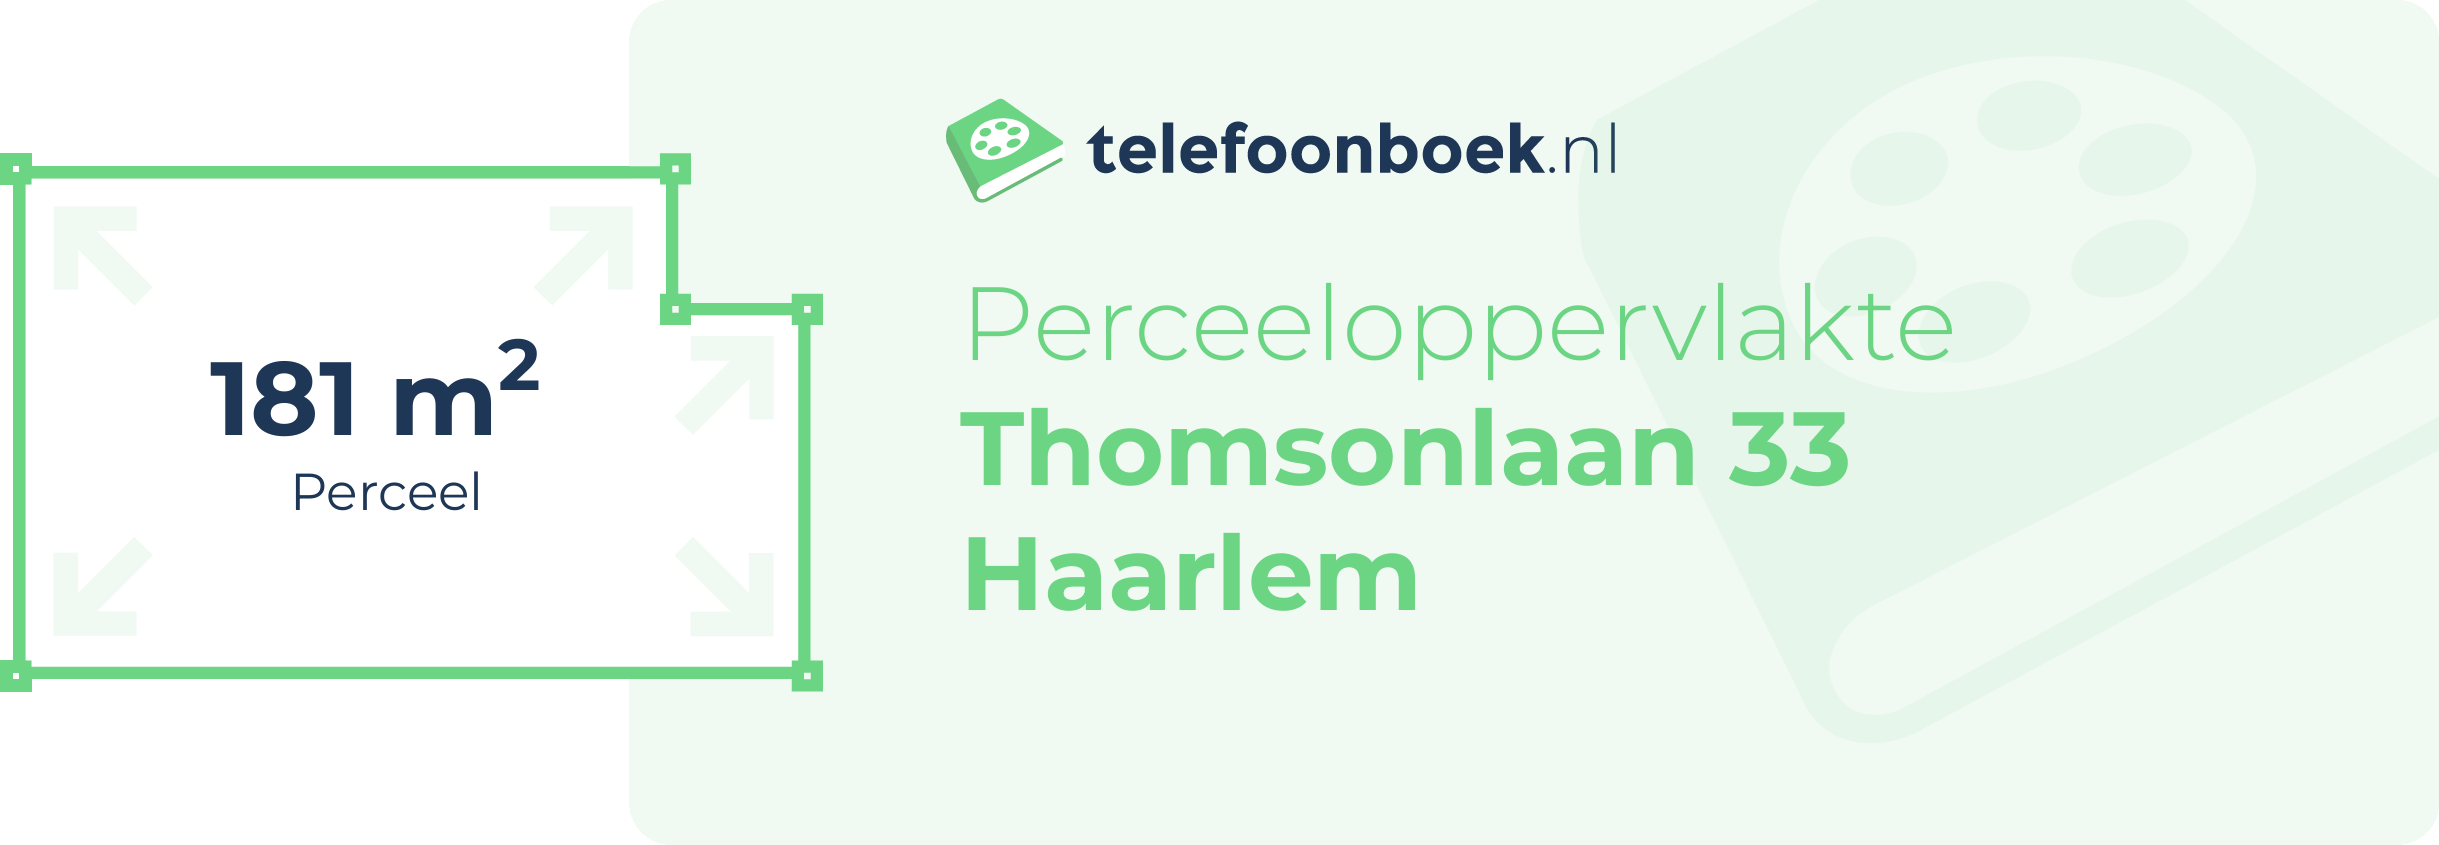 Perceeloppervlakte Thomsonlaan 33 Haarlem